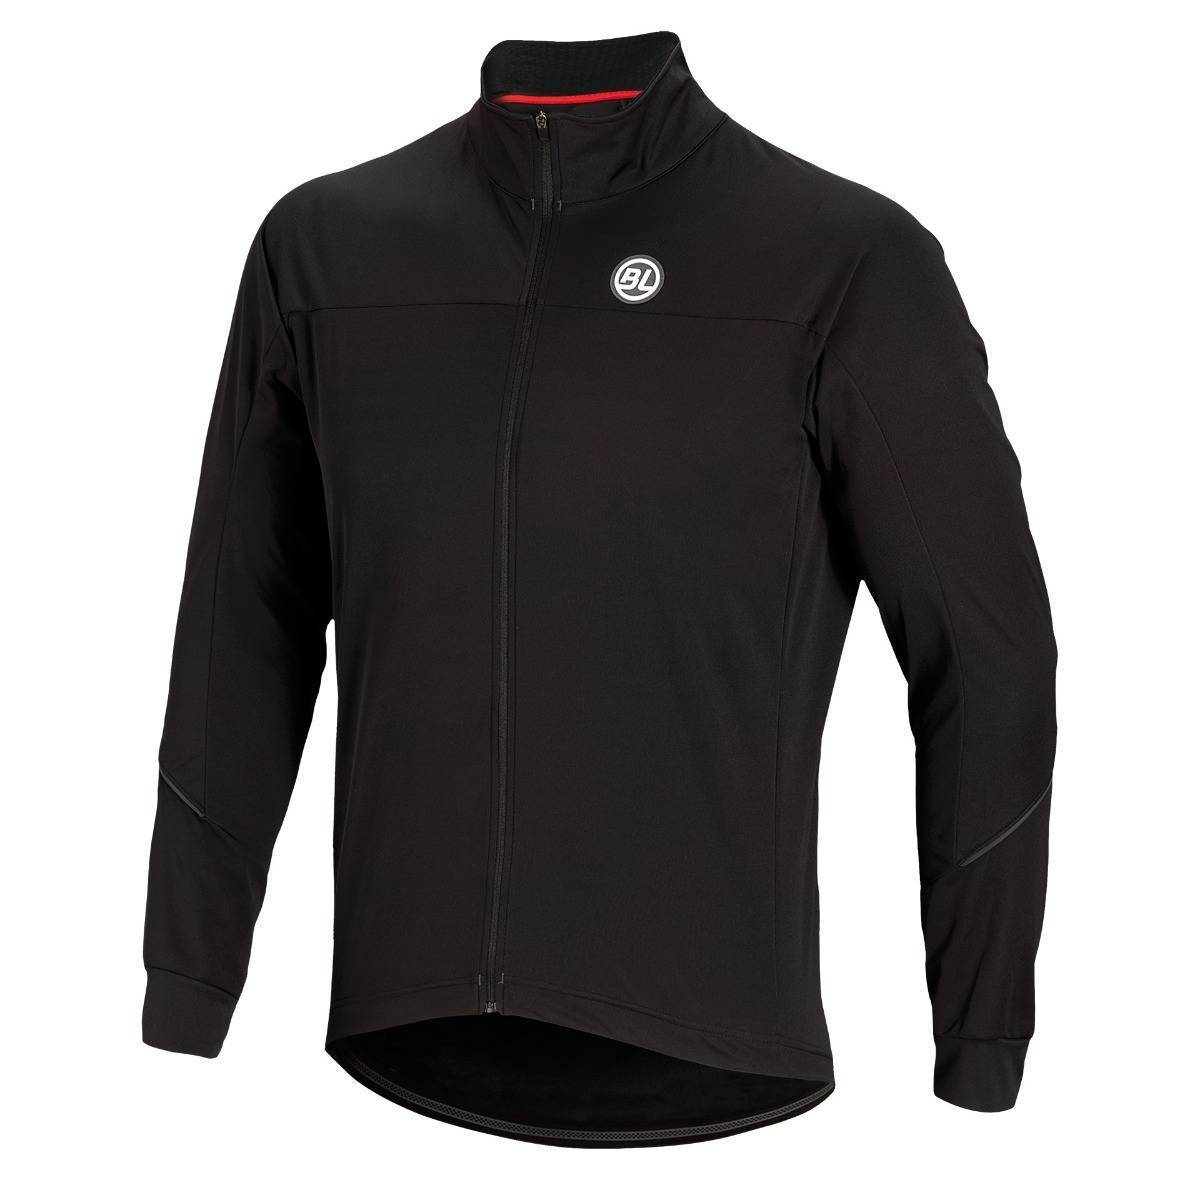 Windproof cycling jacket Normandia